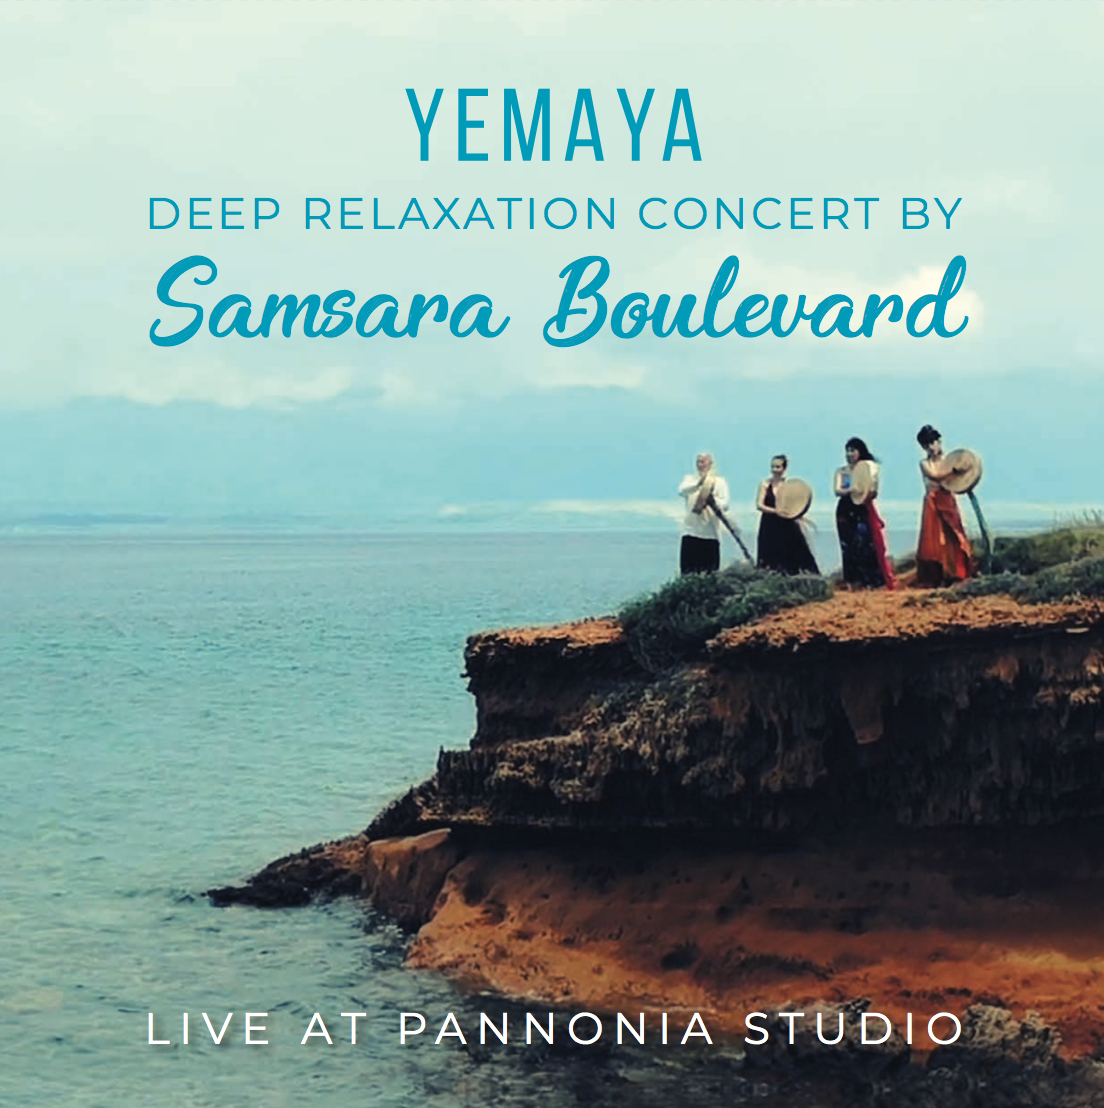 Samsara Boulevard - Yemaya - Deep Relaxation Concert